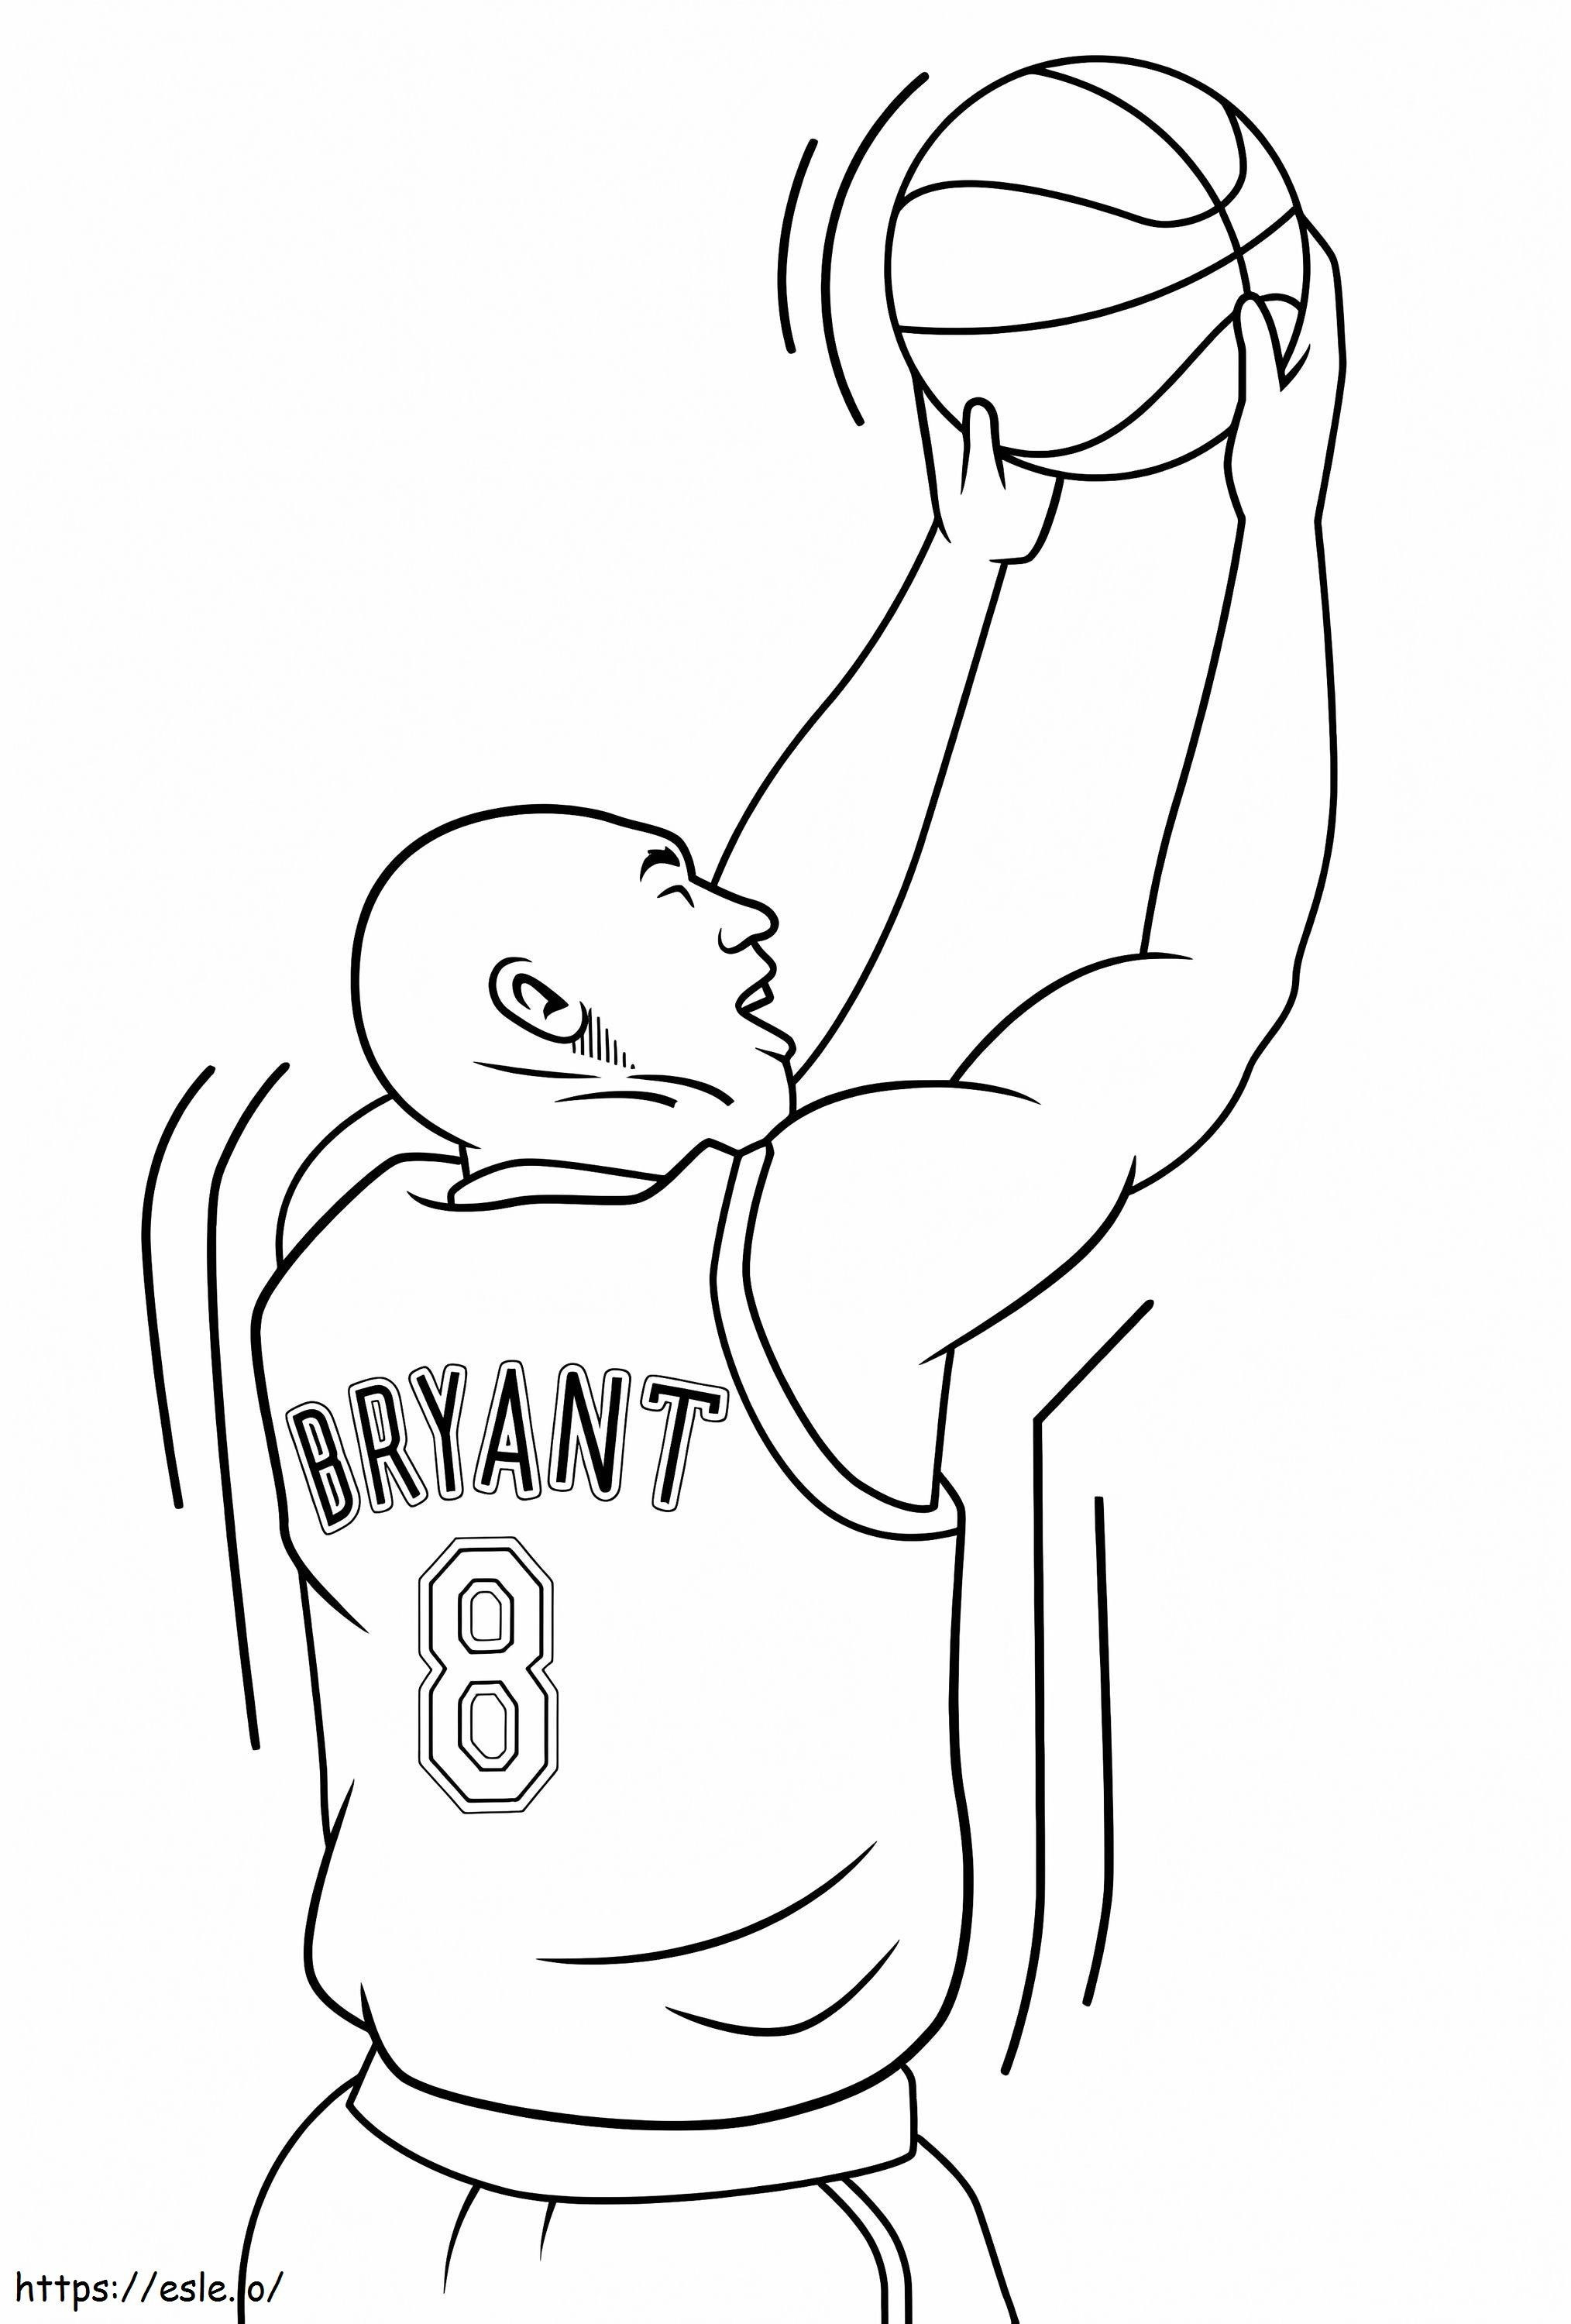 Imprimible gratis de Kobe Bryant para colorear